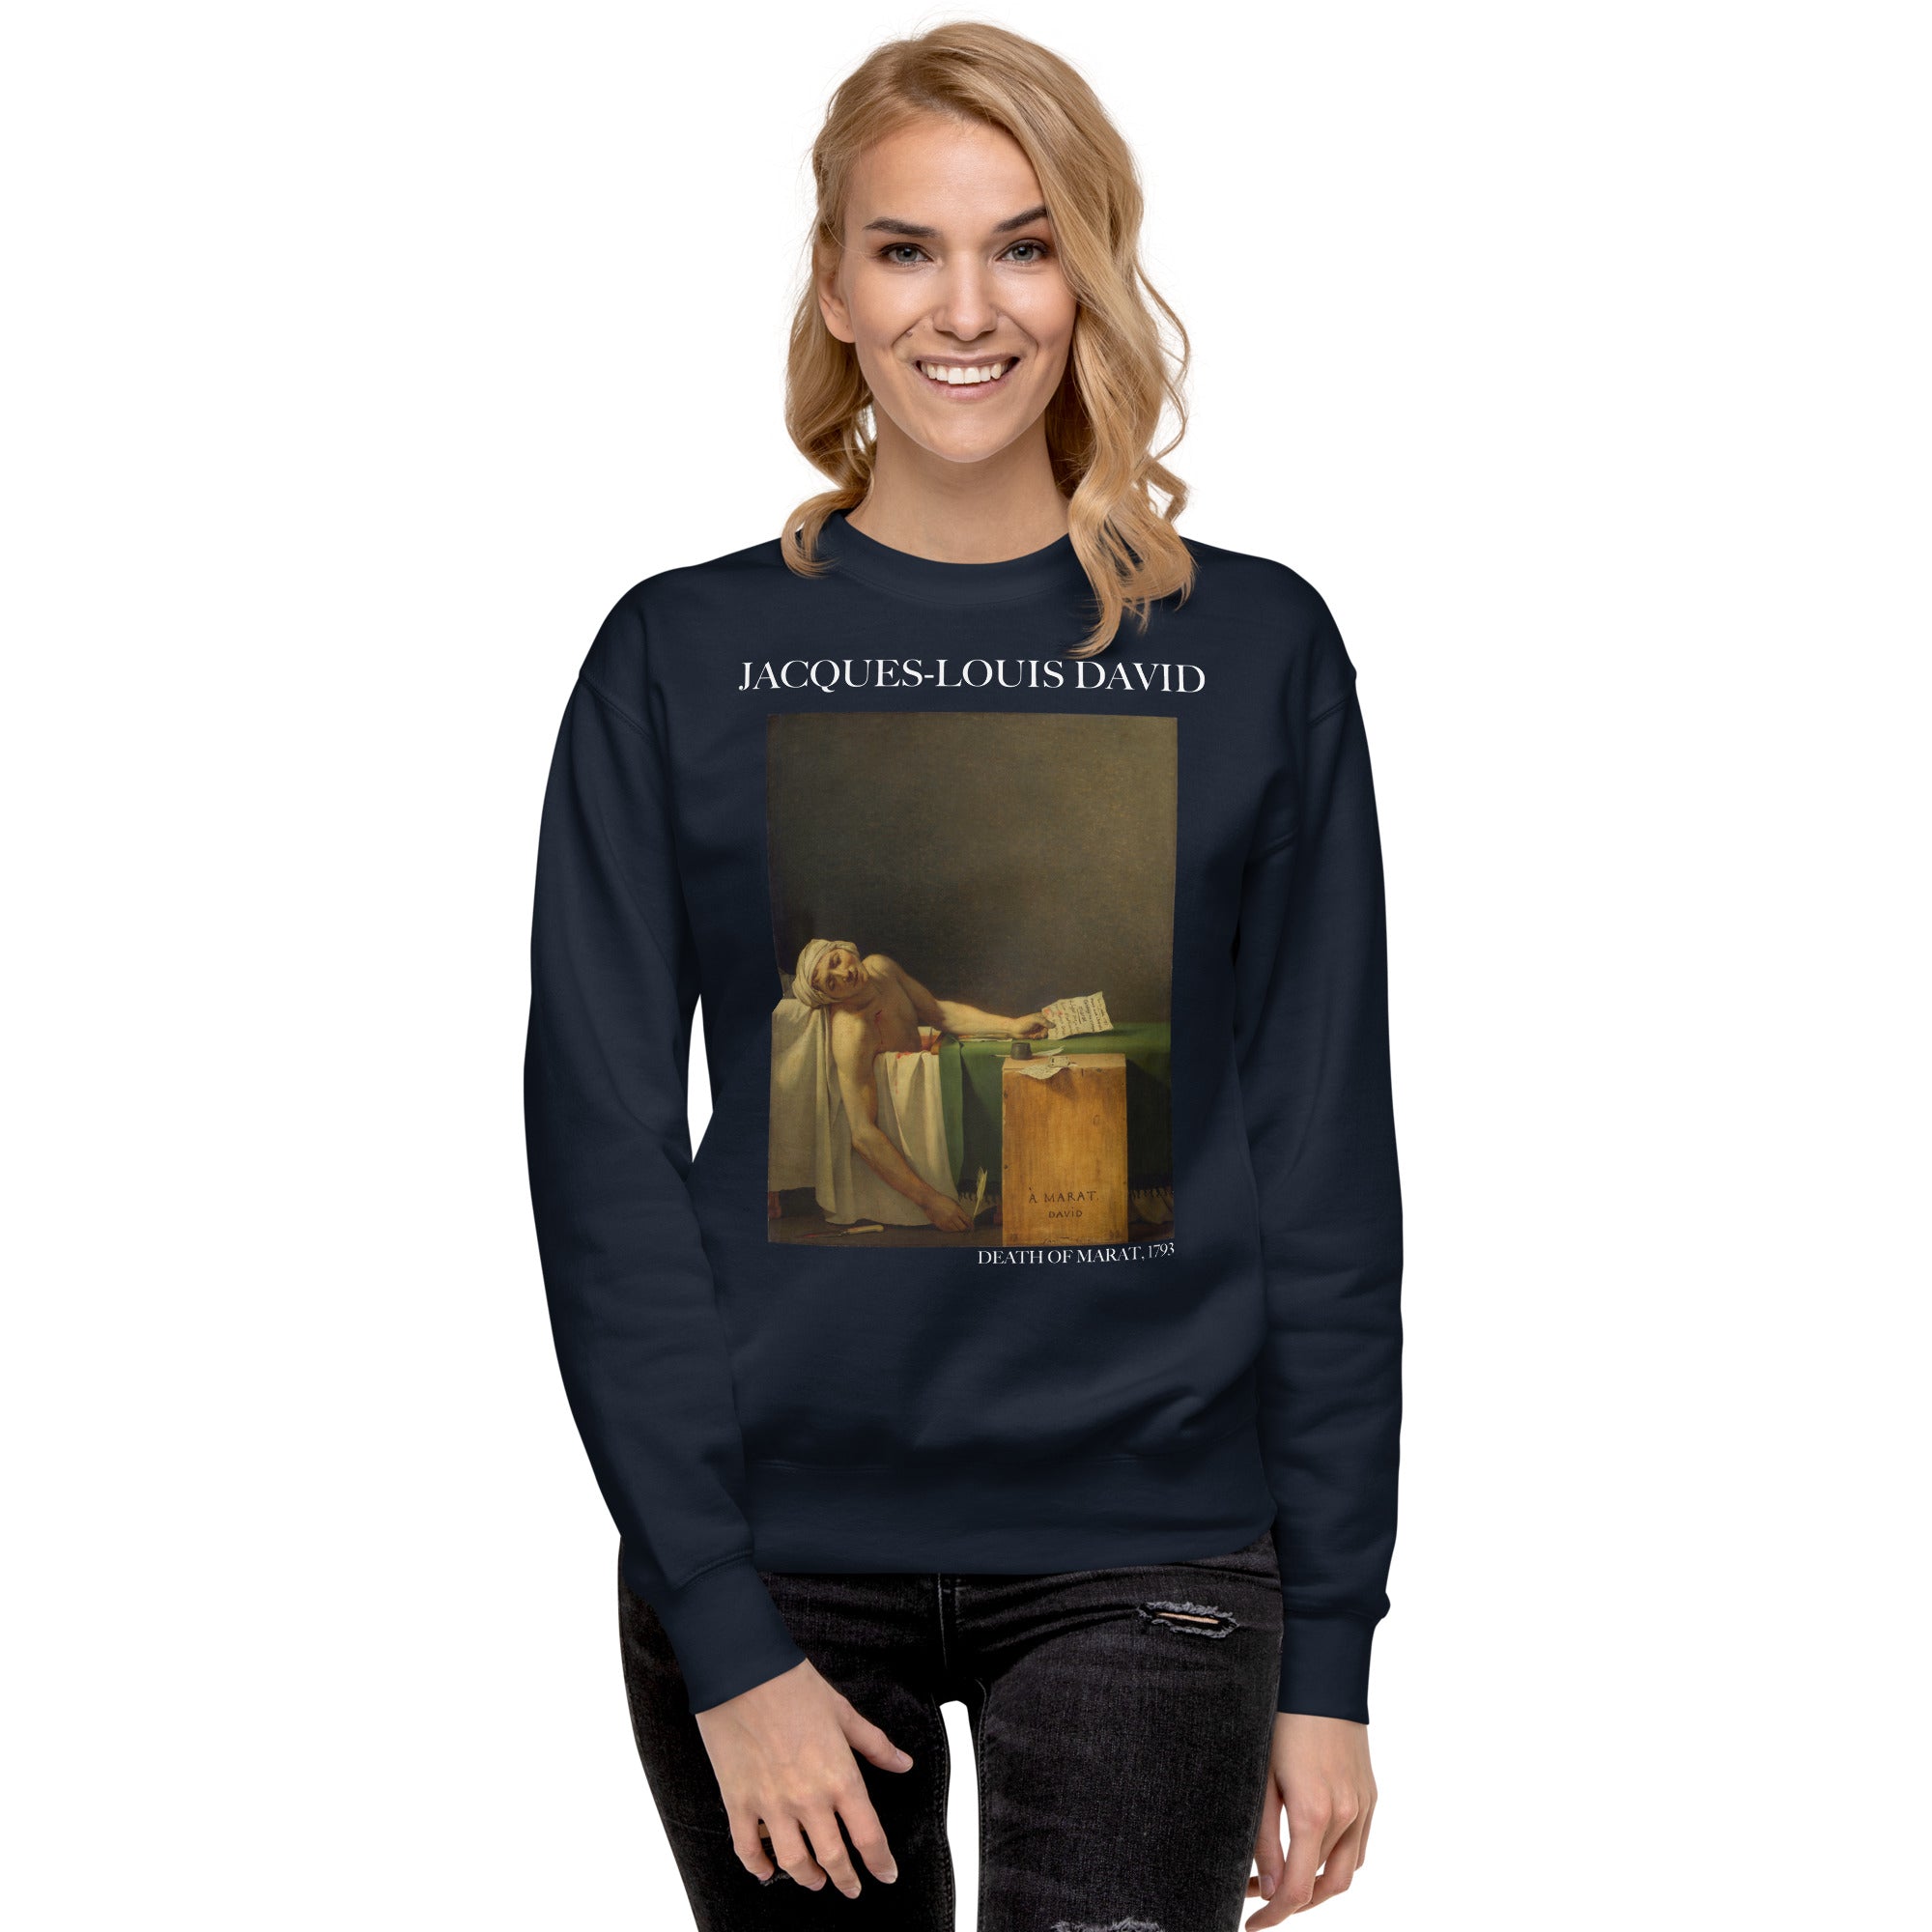 Jacques-Louis David 'Death of Marat' Famous Painting Sweatshirt | Unisex Premium Sweatshirt